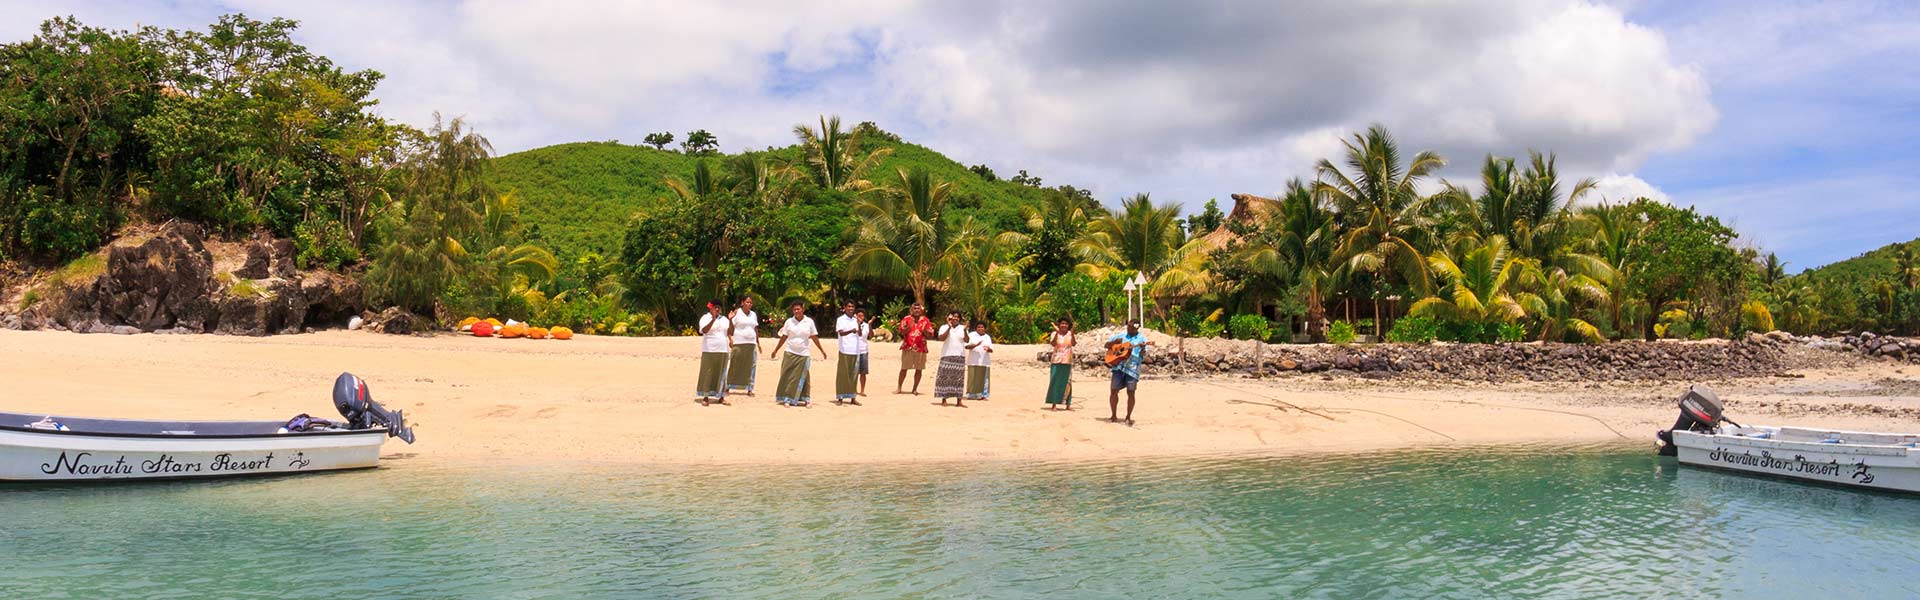 5 Nights in Yasawa Islands, Fiji: Luxe Resort, Meals & More@ $2,386 PP!